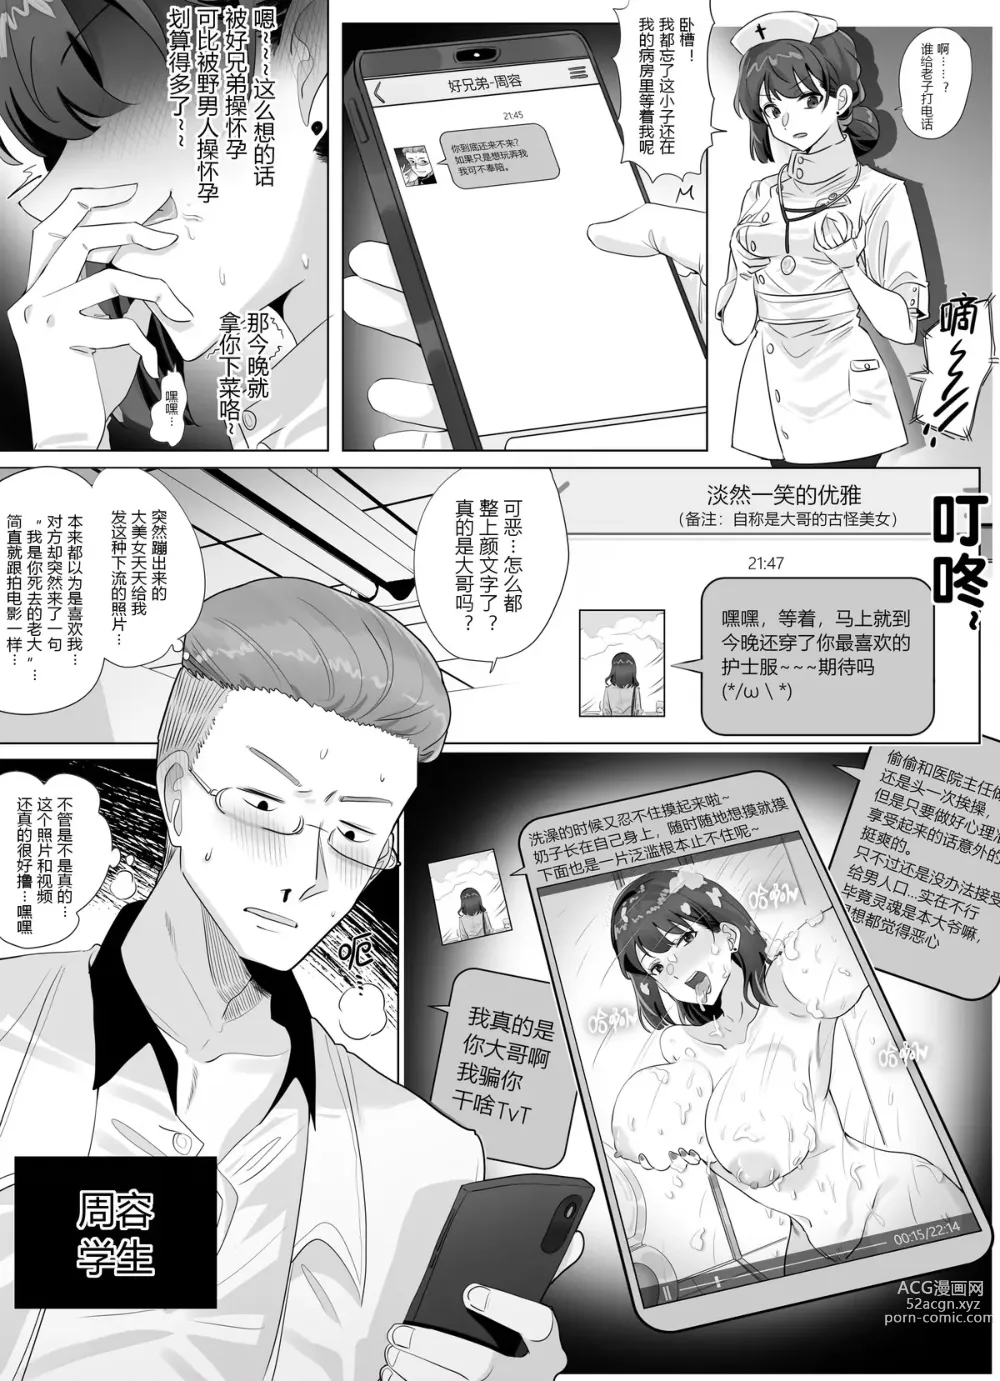 Page 24 of doujinshi 借身还魂